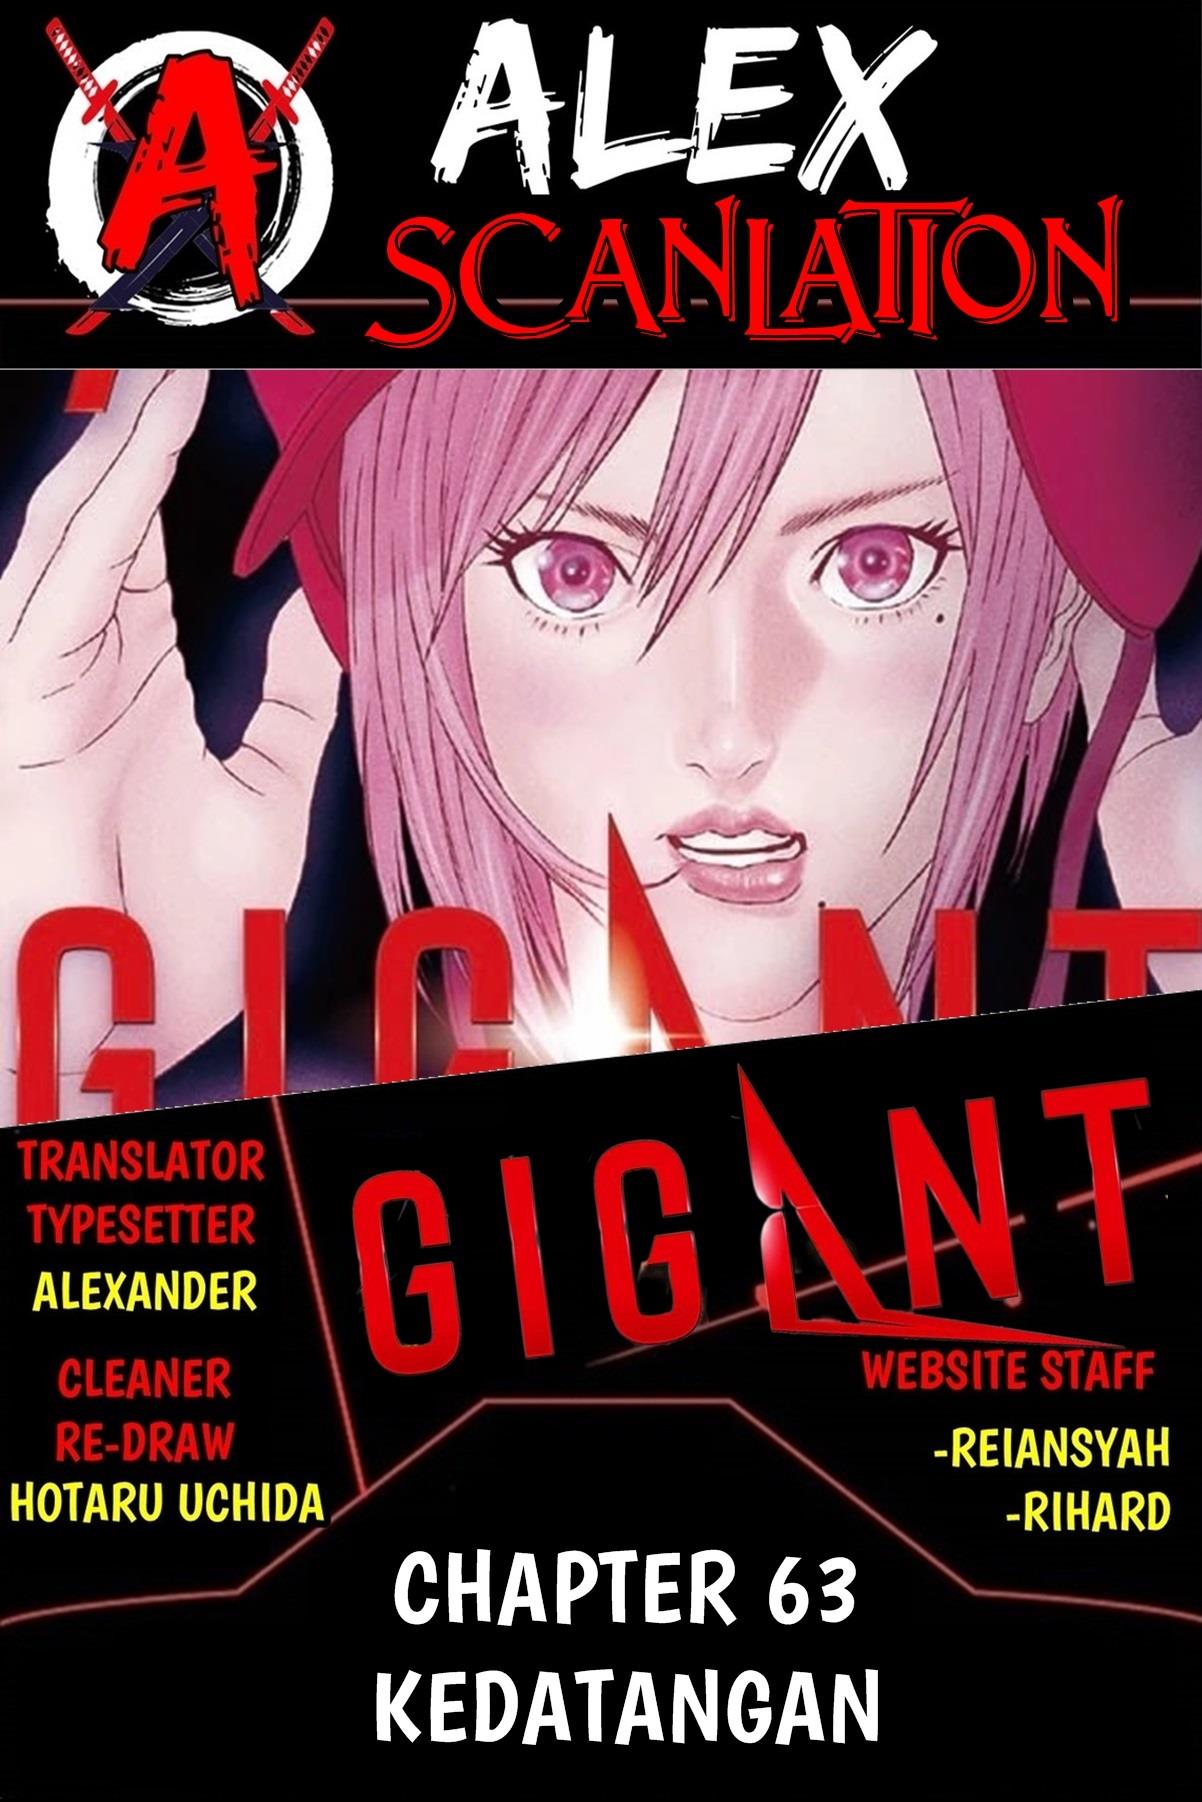 GIGANT Chapter 63